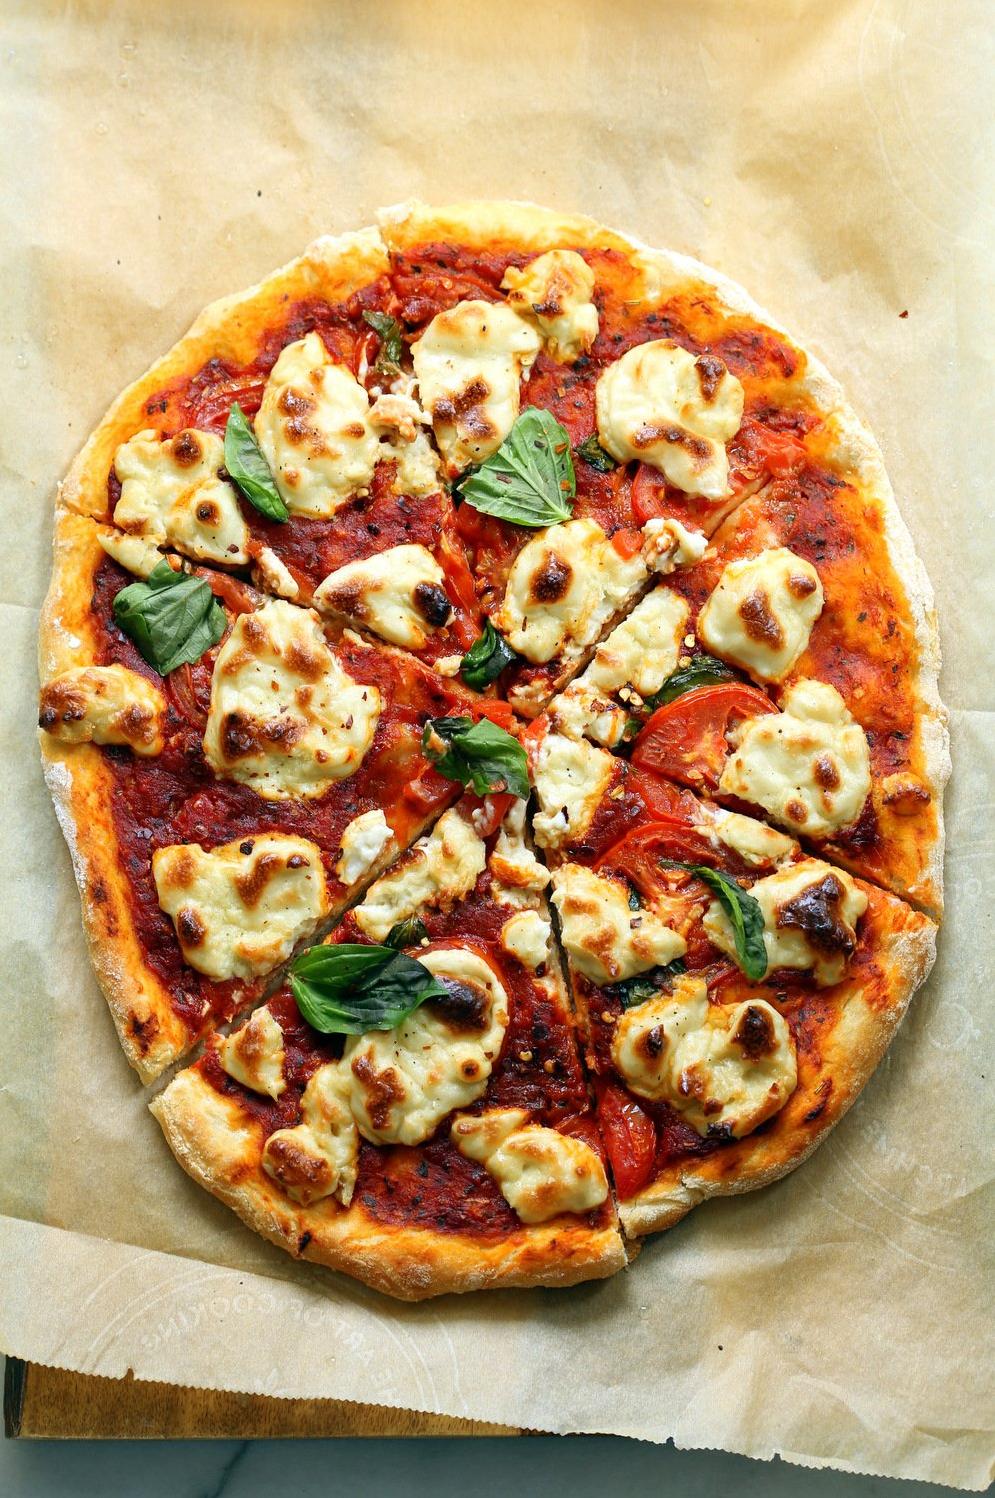  Simple but delicious, the vegan Margherita pizza.